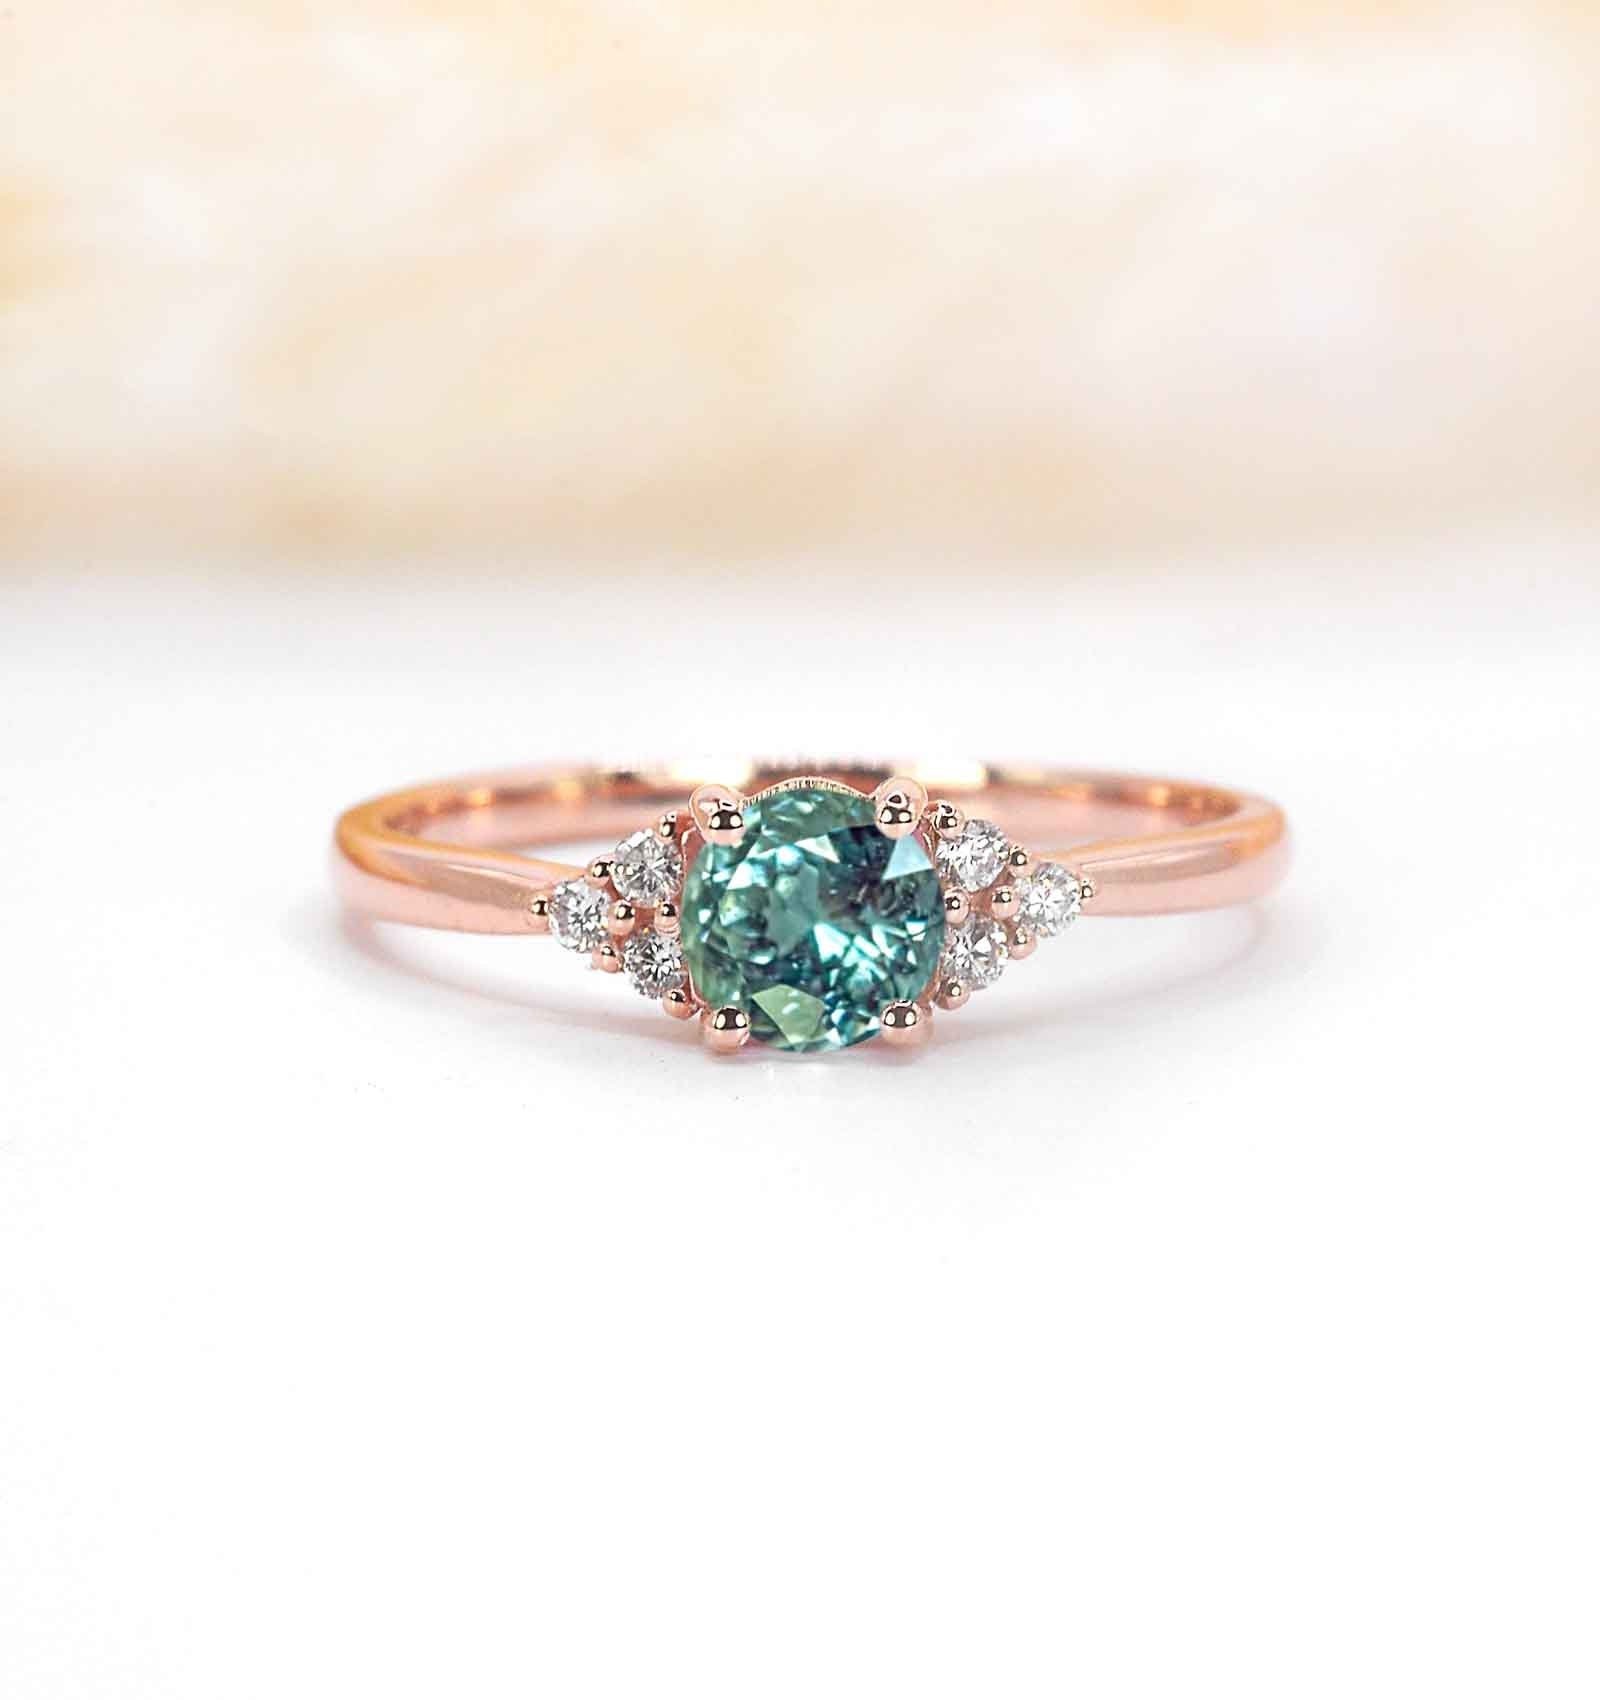 Natural Mint Green Tourmaline Diamond Engagement Ring | Art Deco Solid Rose, Yellow, White Gold Or Platinum Handmade